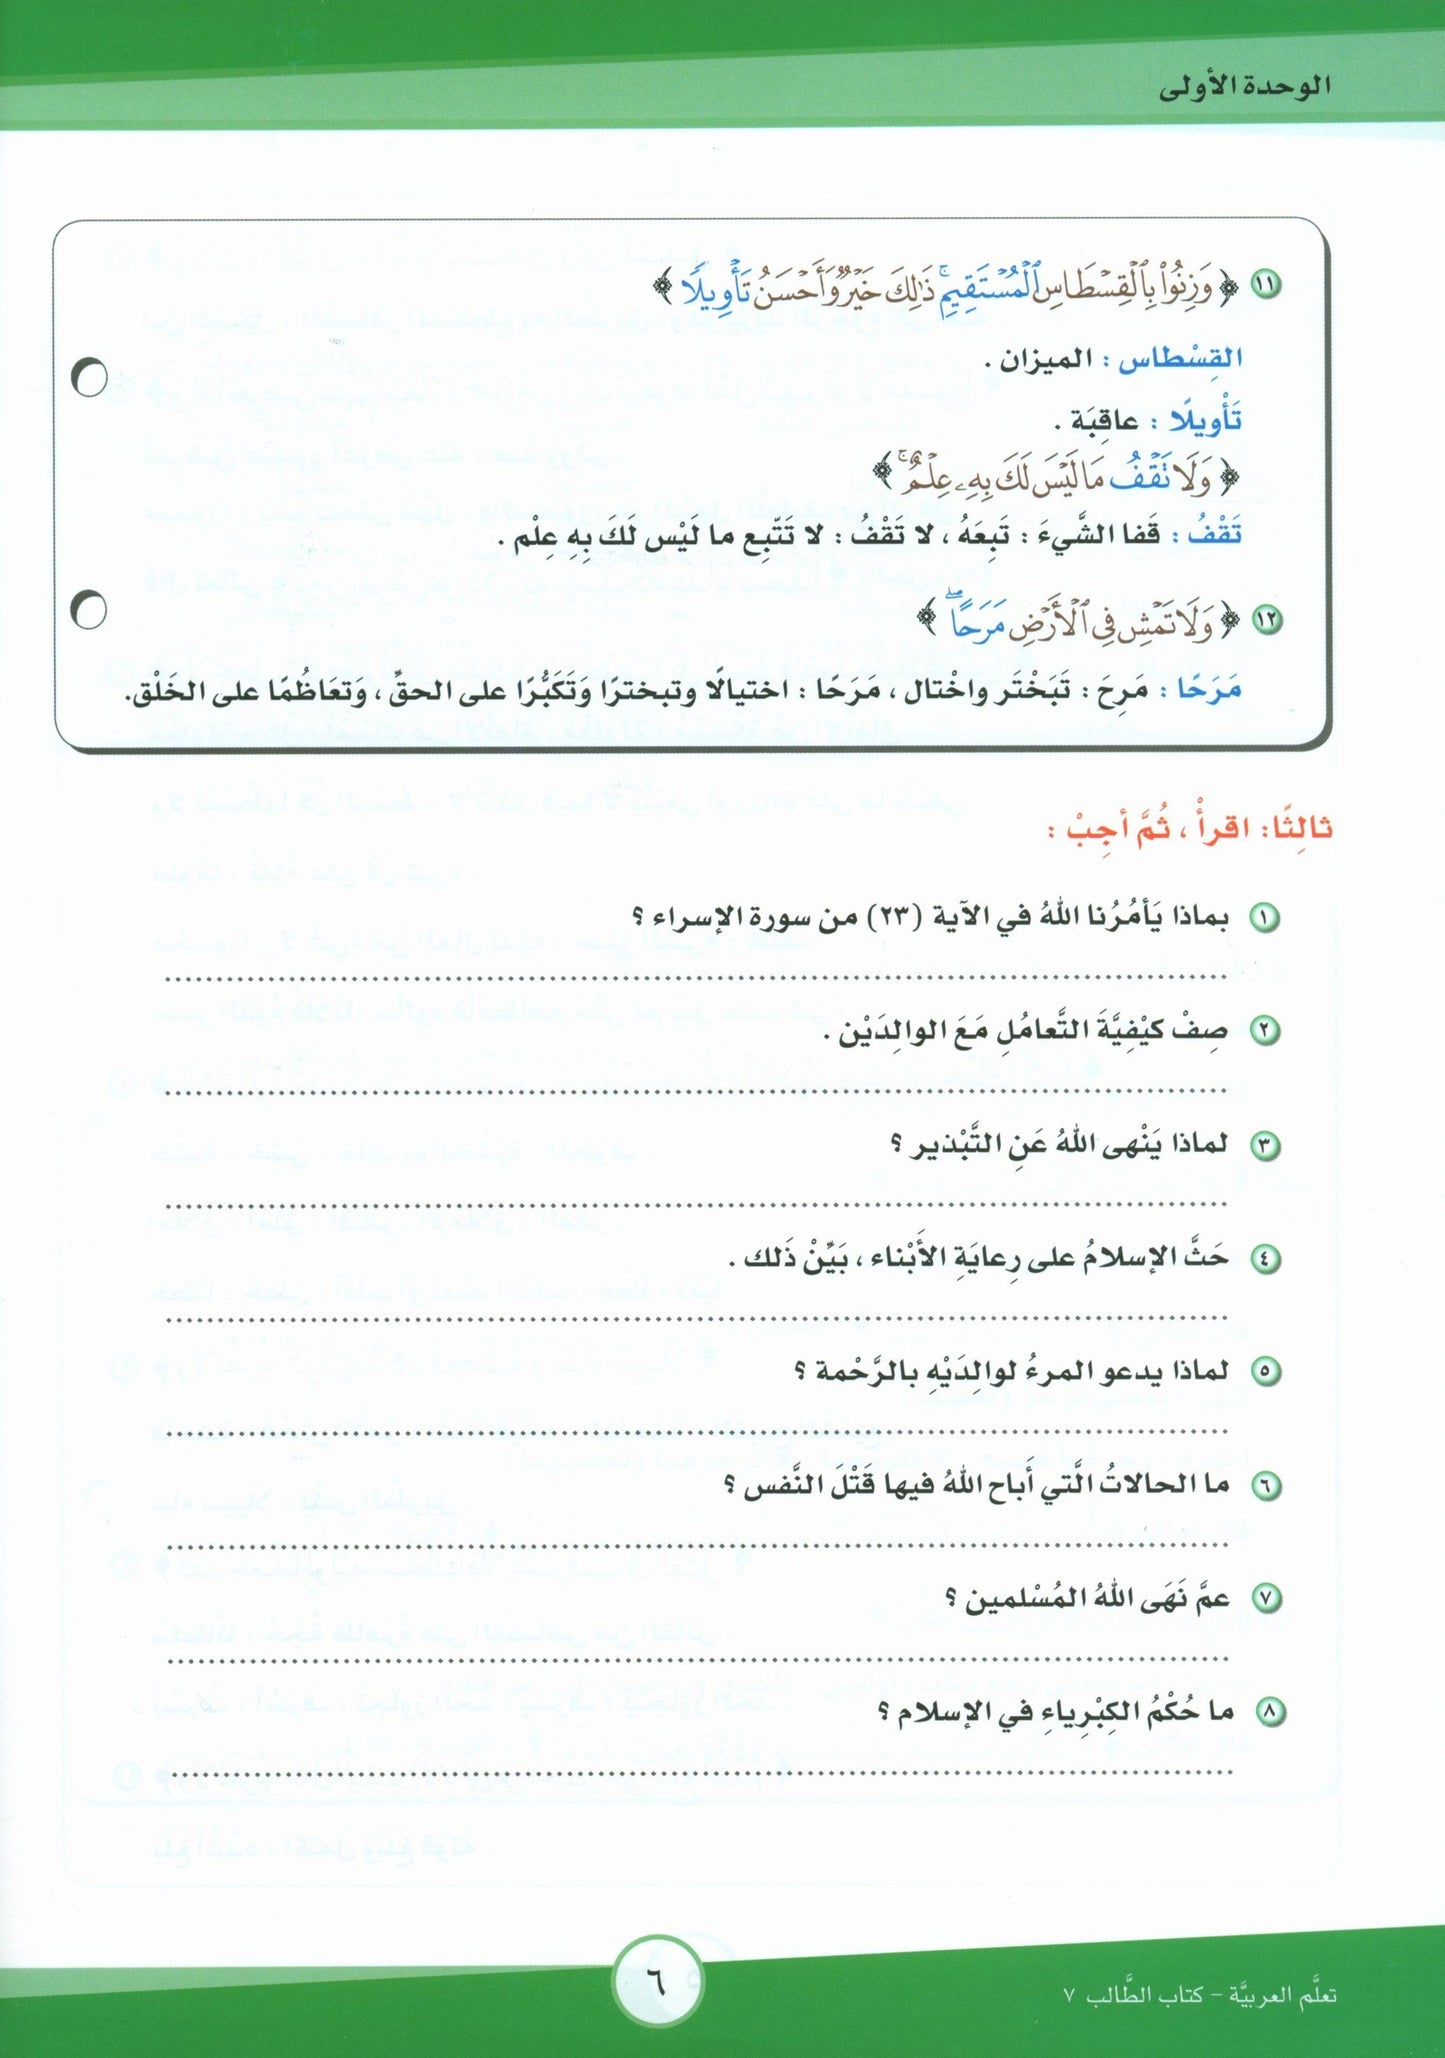 ICO Learn Arabic - Textbook - Level 7 Part 1 - تعلم العربية